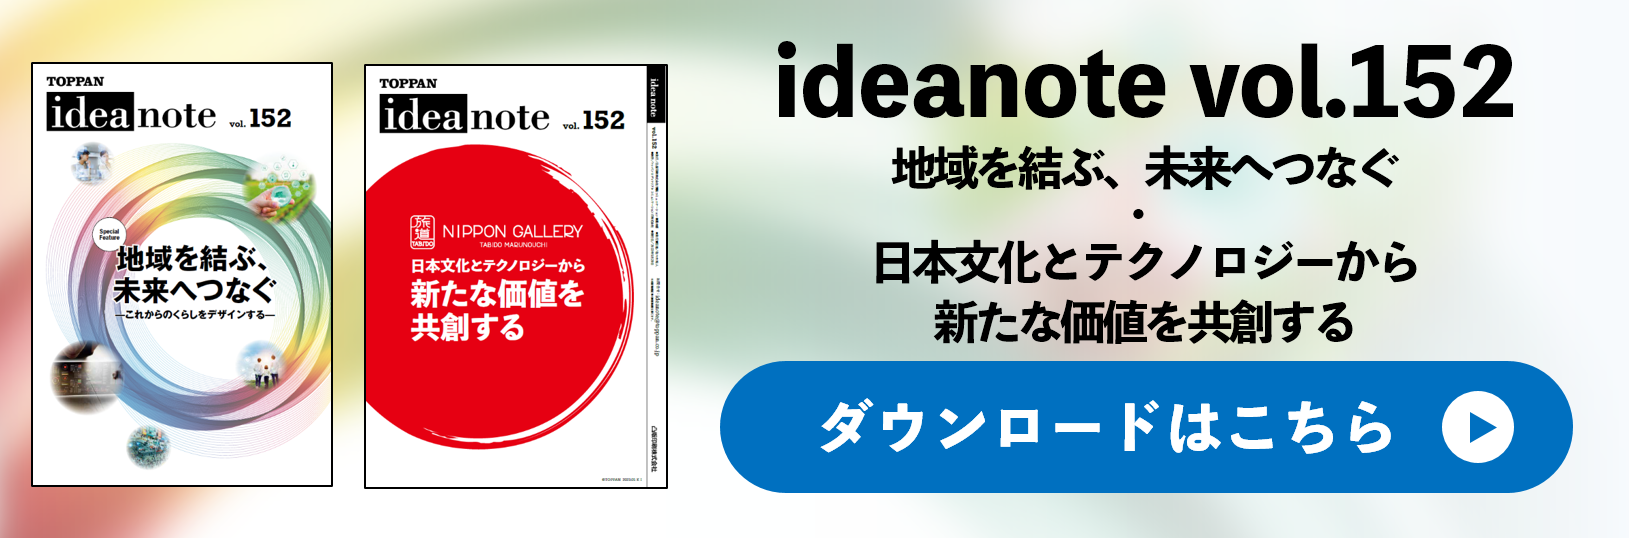 ideanote vol.152 地域を結ぶ、未来へつなぐ/日本文化とテクノロジーから新たな価値を共創する